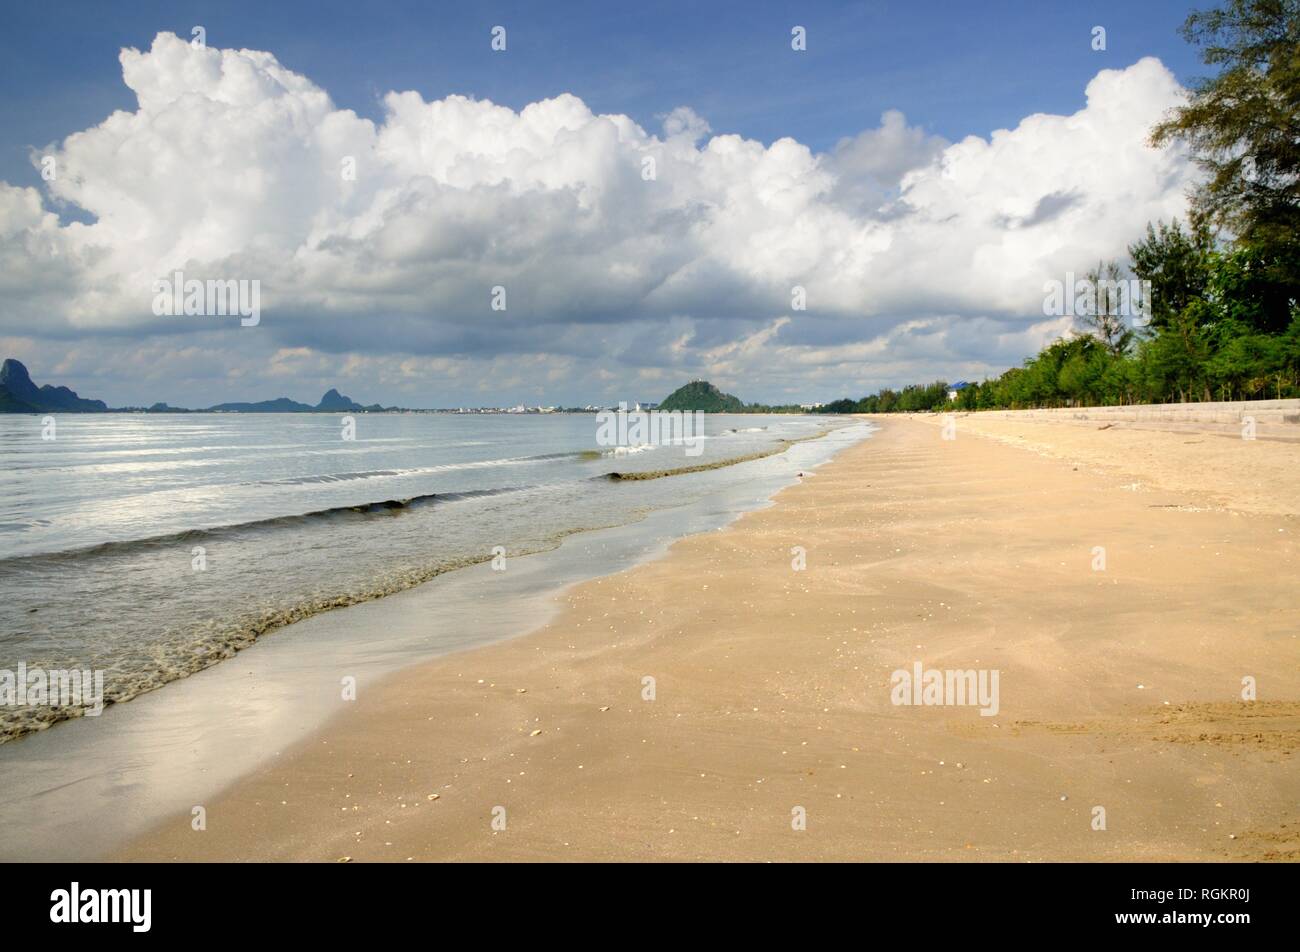 Sandy beach on the coast of the Prachuap bay in Prachuap Khiri Khan province of Thailand Stock Photo